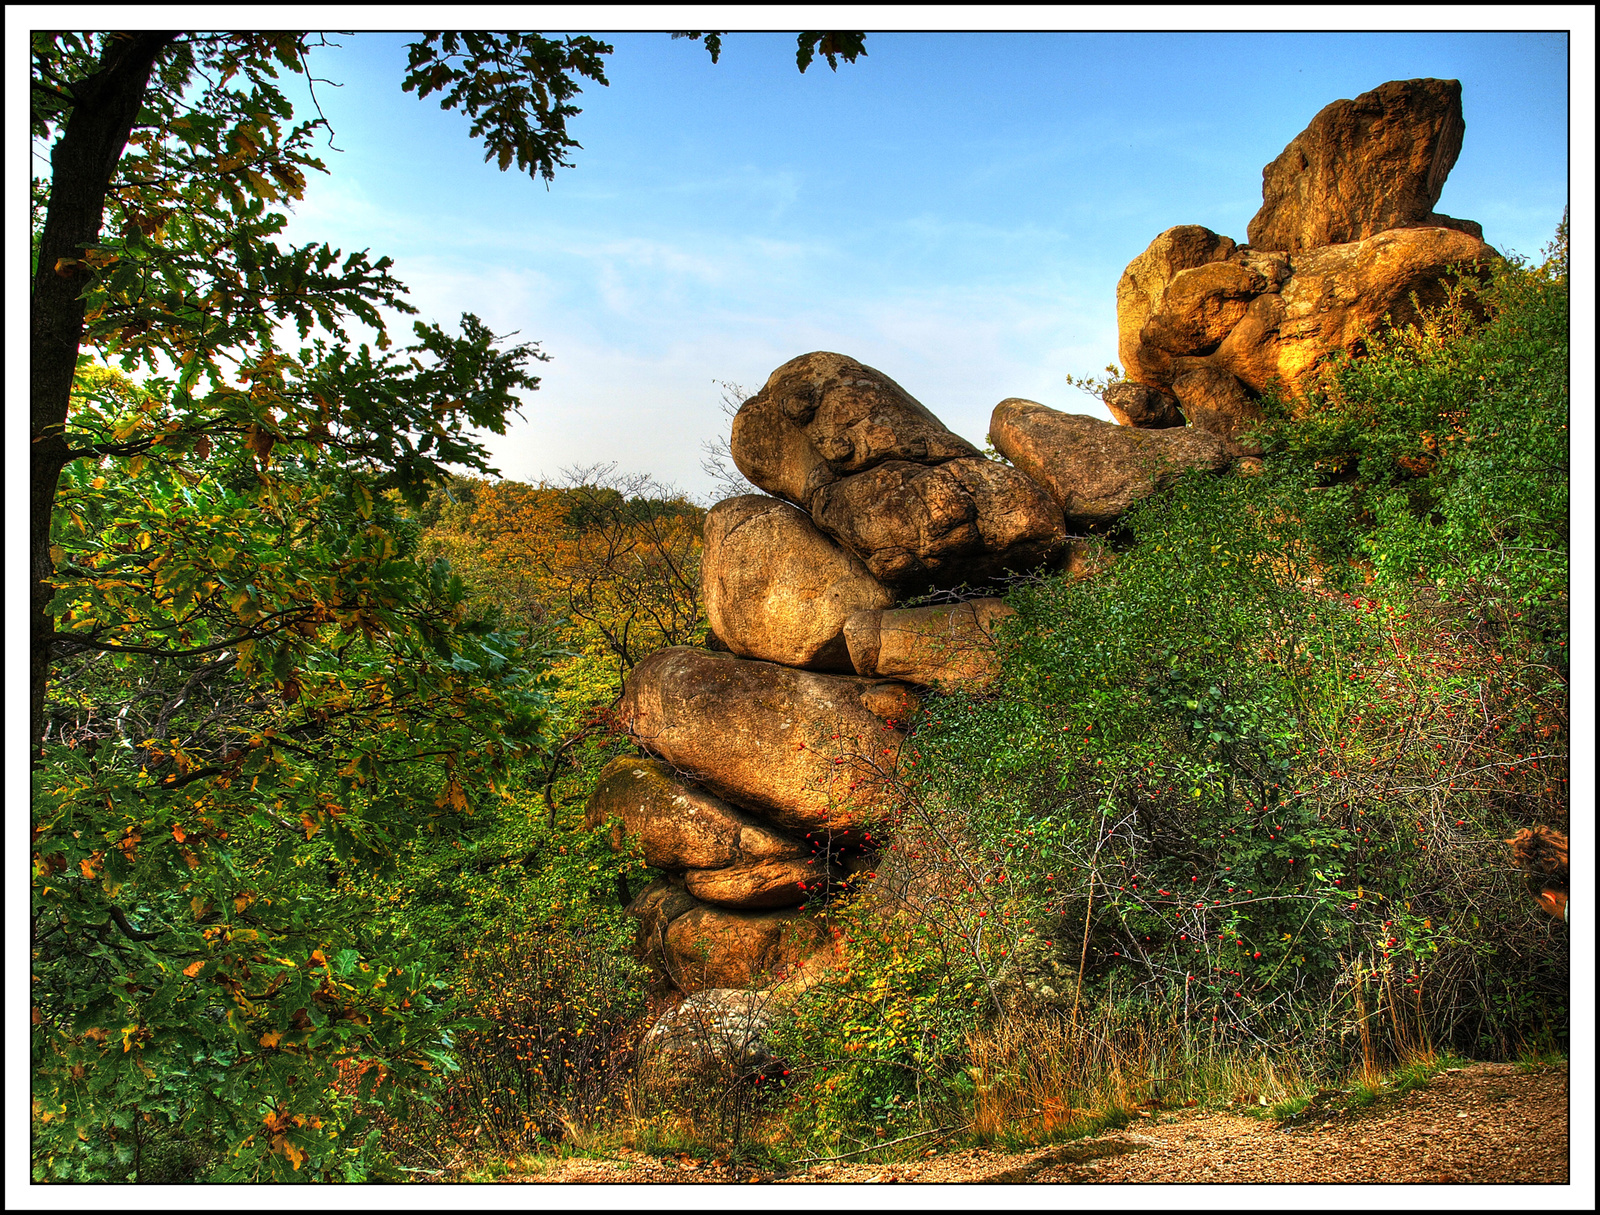 Pákozdi-ingókövek: A Pandúr-kő